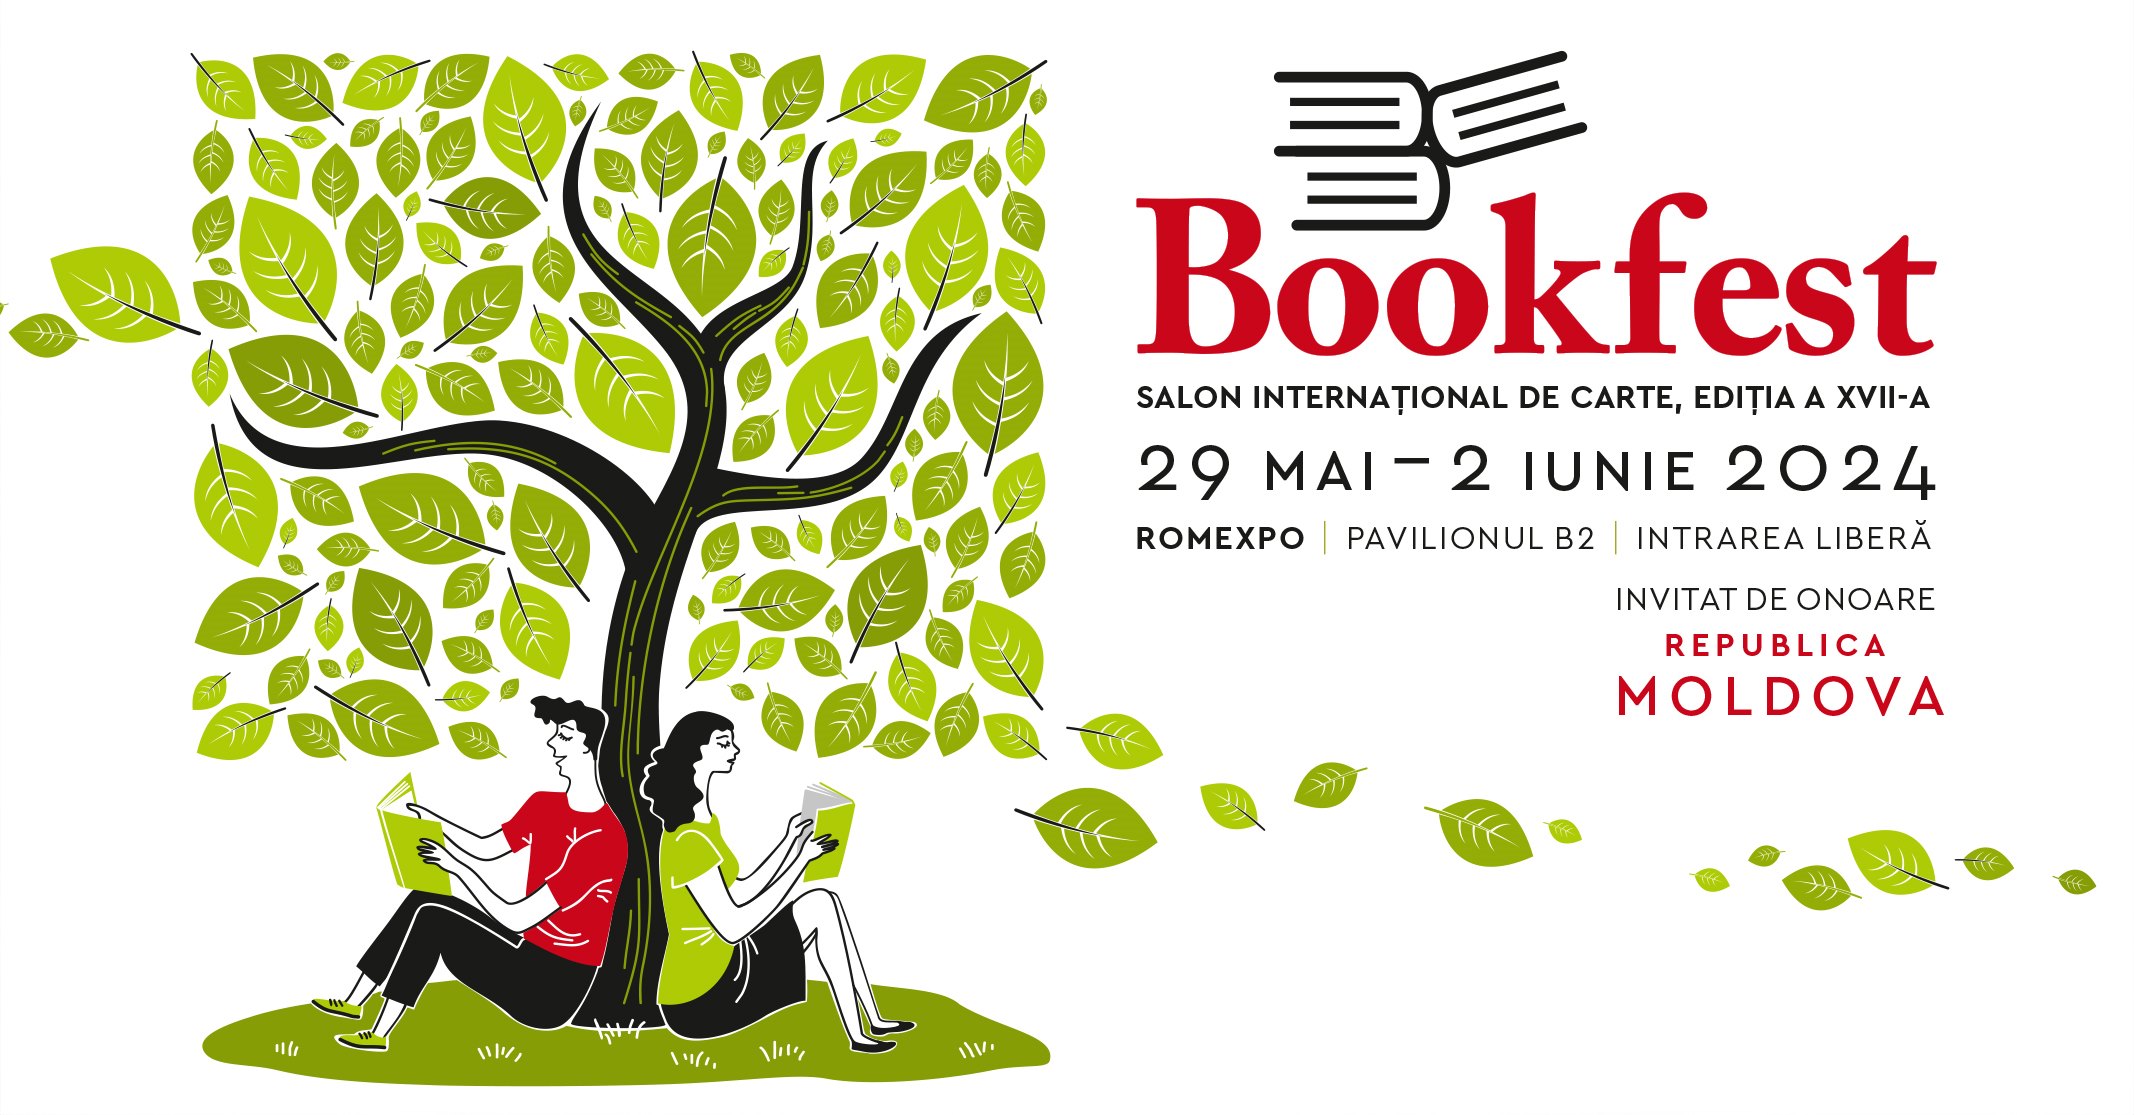 Bookfest 2024 registrations have begun!